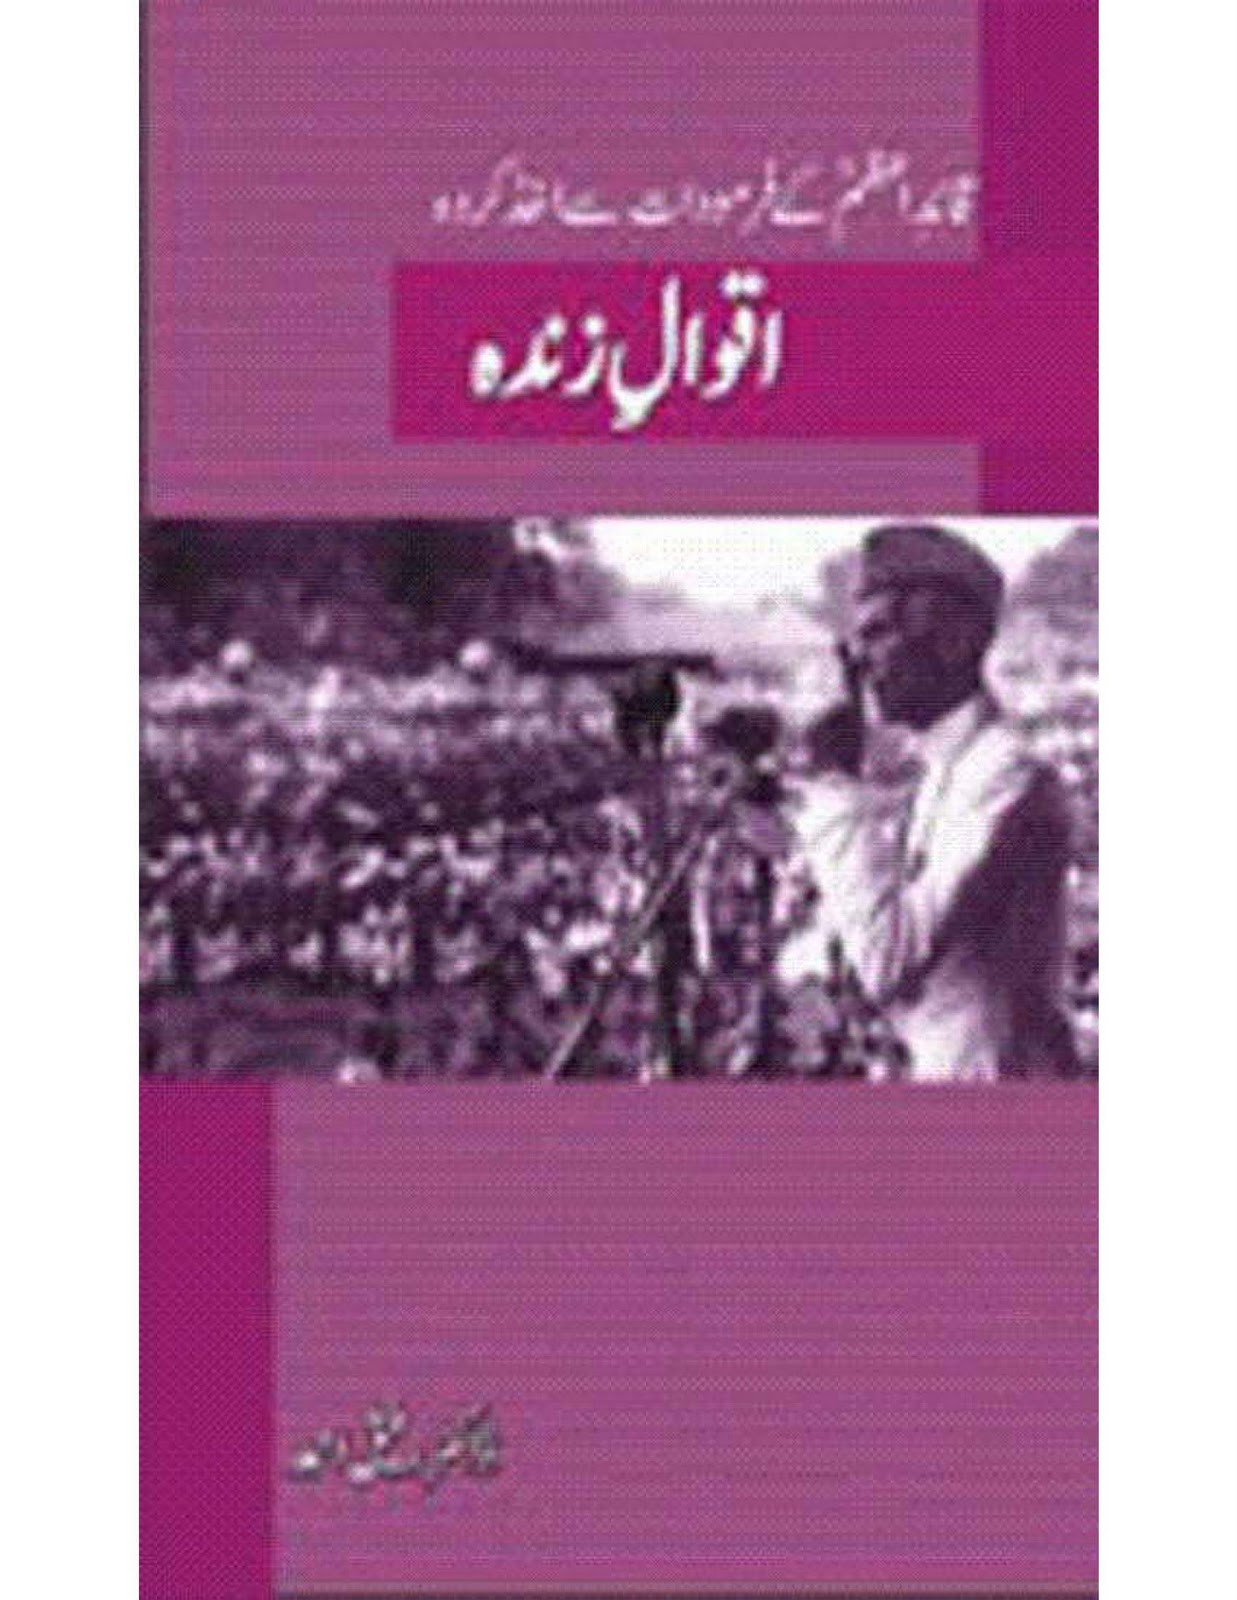 Aqwal e Zinda Quaid ke Farmudaat by Doctor Rafique Ahmed download pdf